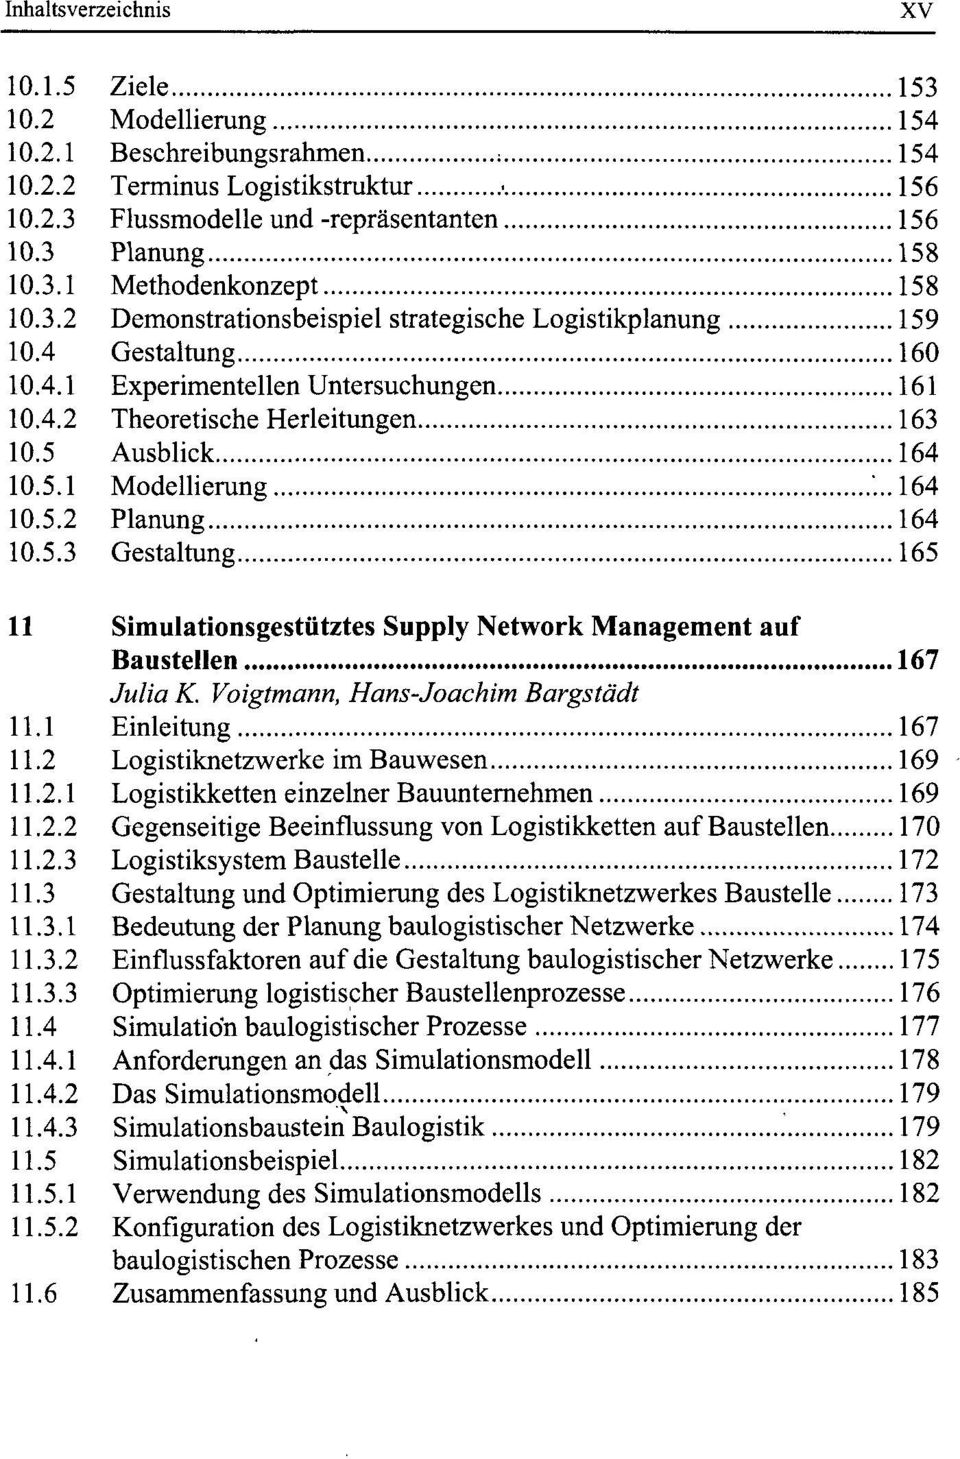 ..164 10.5.2 Planung 164 10.5.3 Gestaltung 165 11 Simulationsgestütztes Supply Network Management auf Baustellen 167 Julia K. Voigtmann, Hans-Joachim Bargstädt 11.1 Einleitung 167 11.